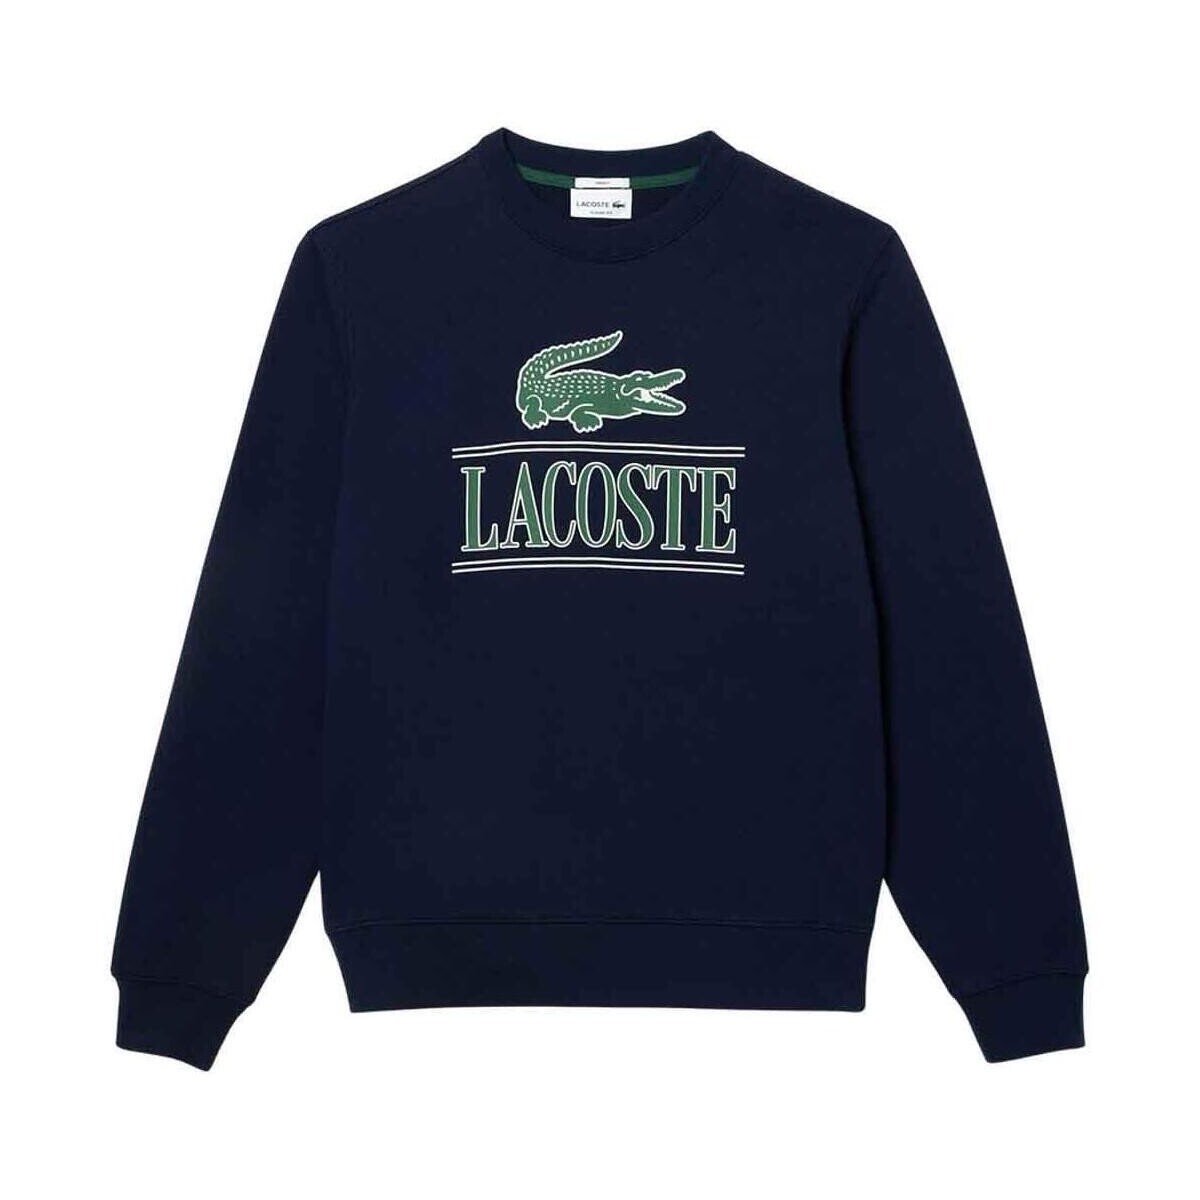 Textiel Sweaters / Sweatshirts Lacoste  Blauw